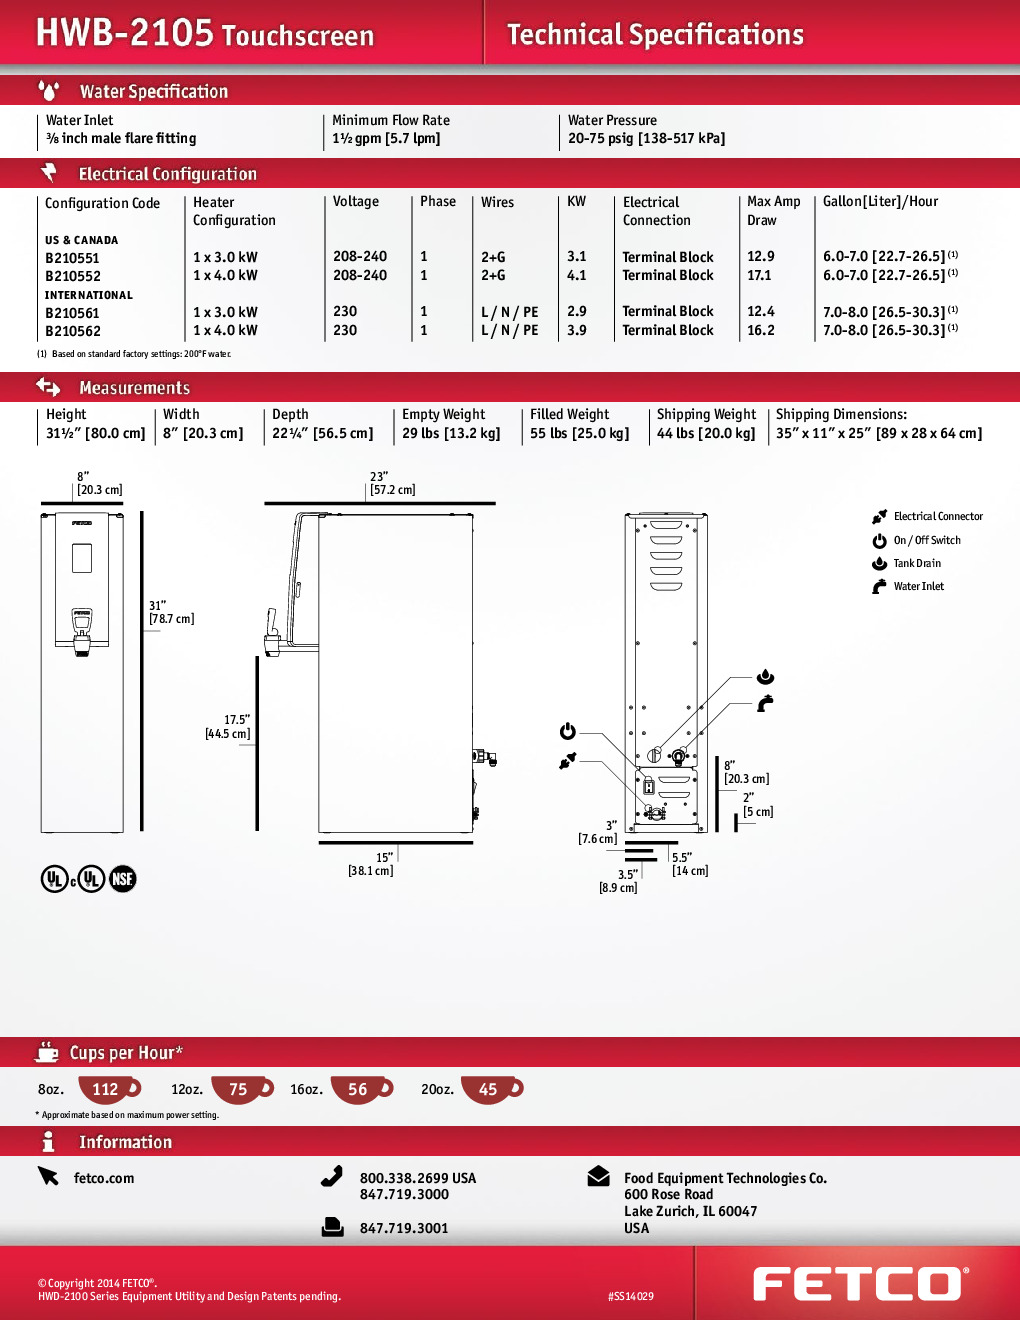 FETCO HWB-2105 (B210552) Hot Water Dispenser